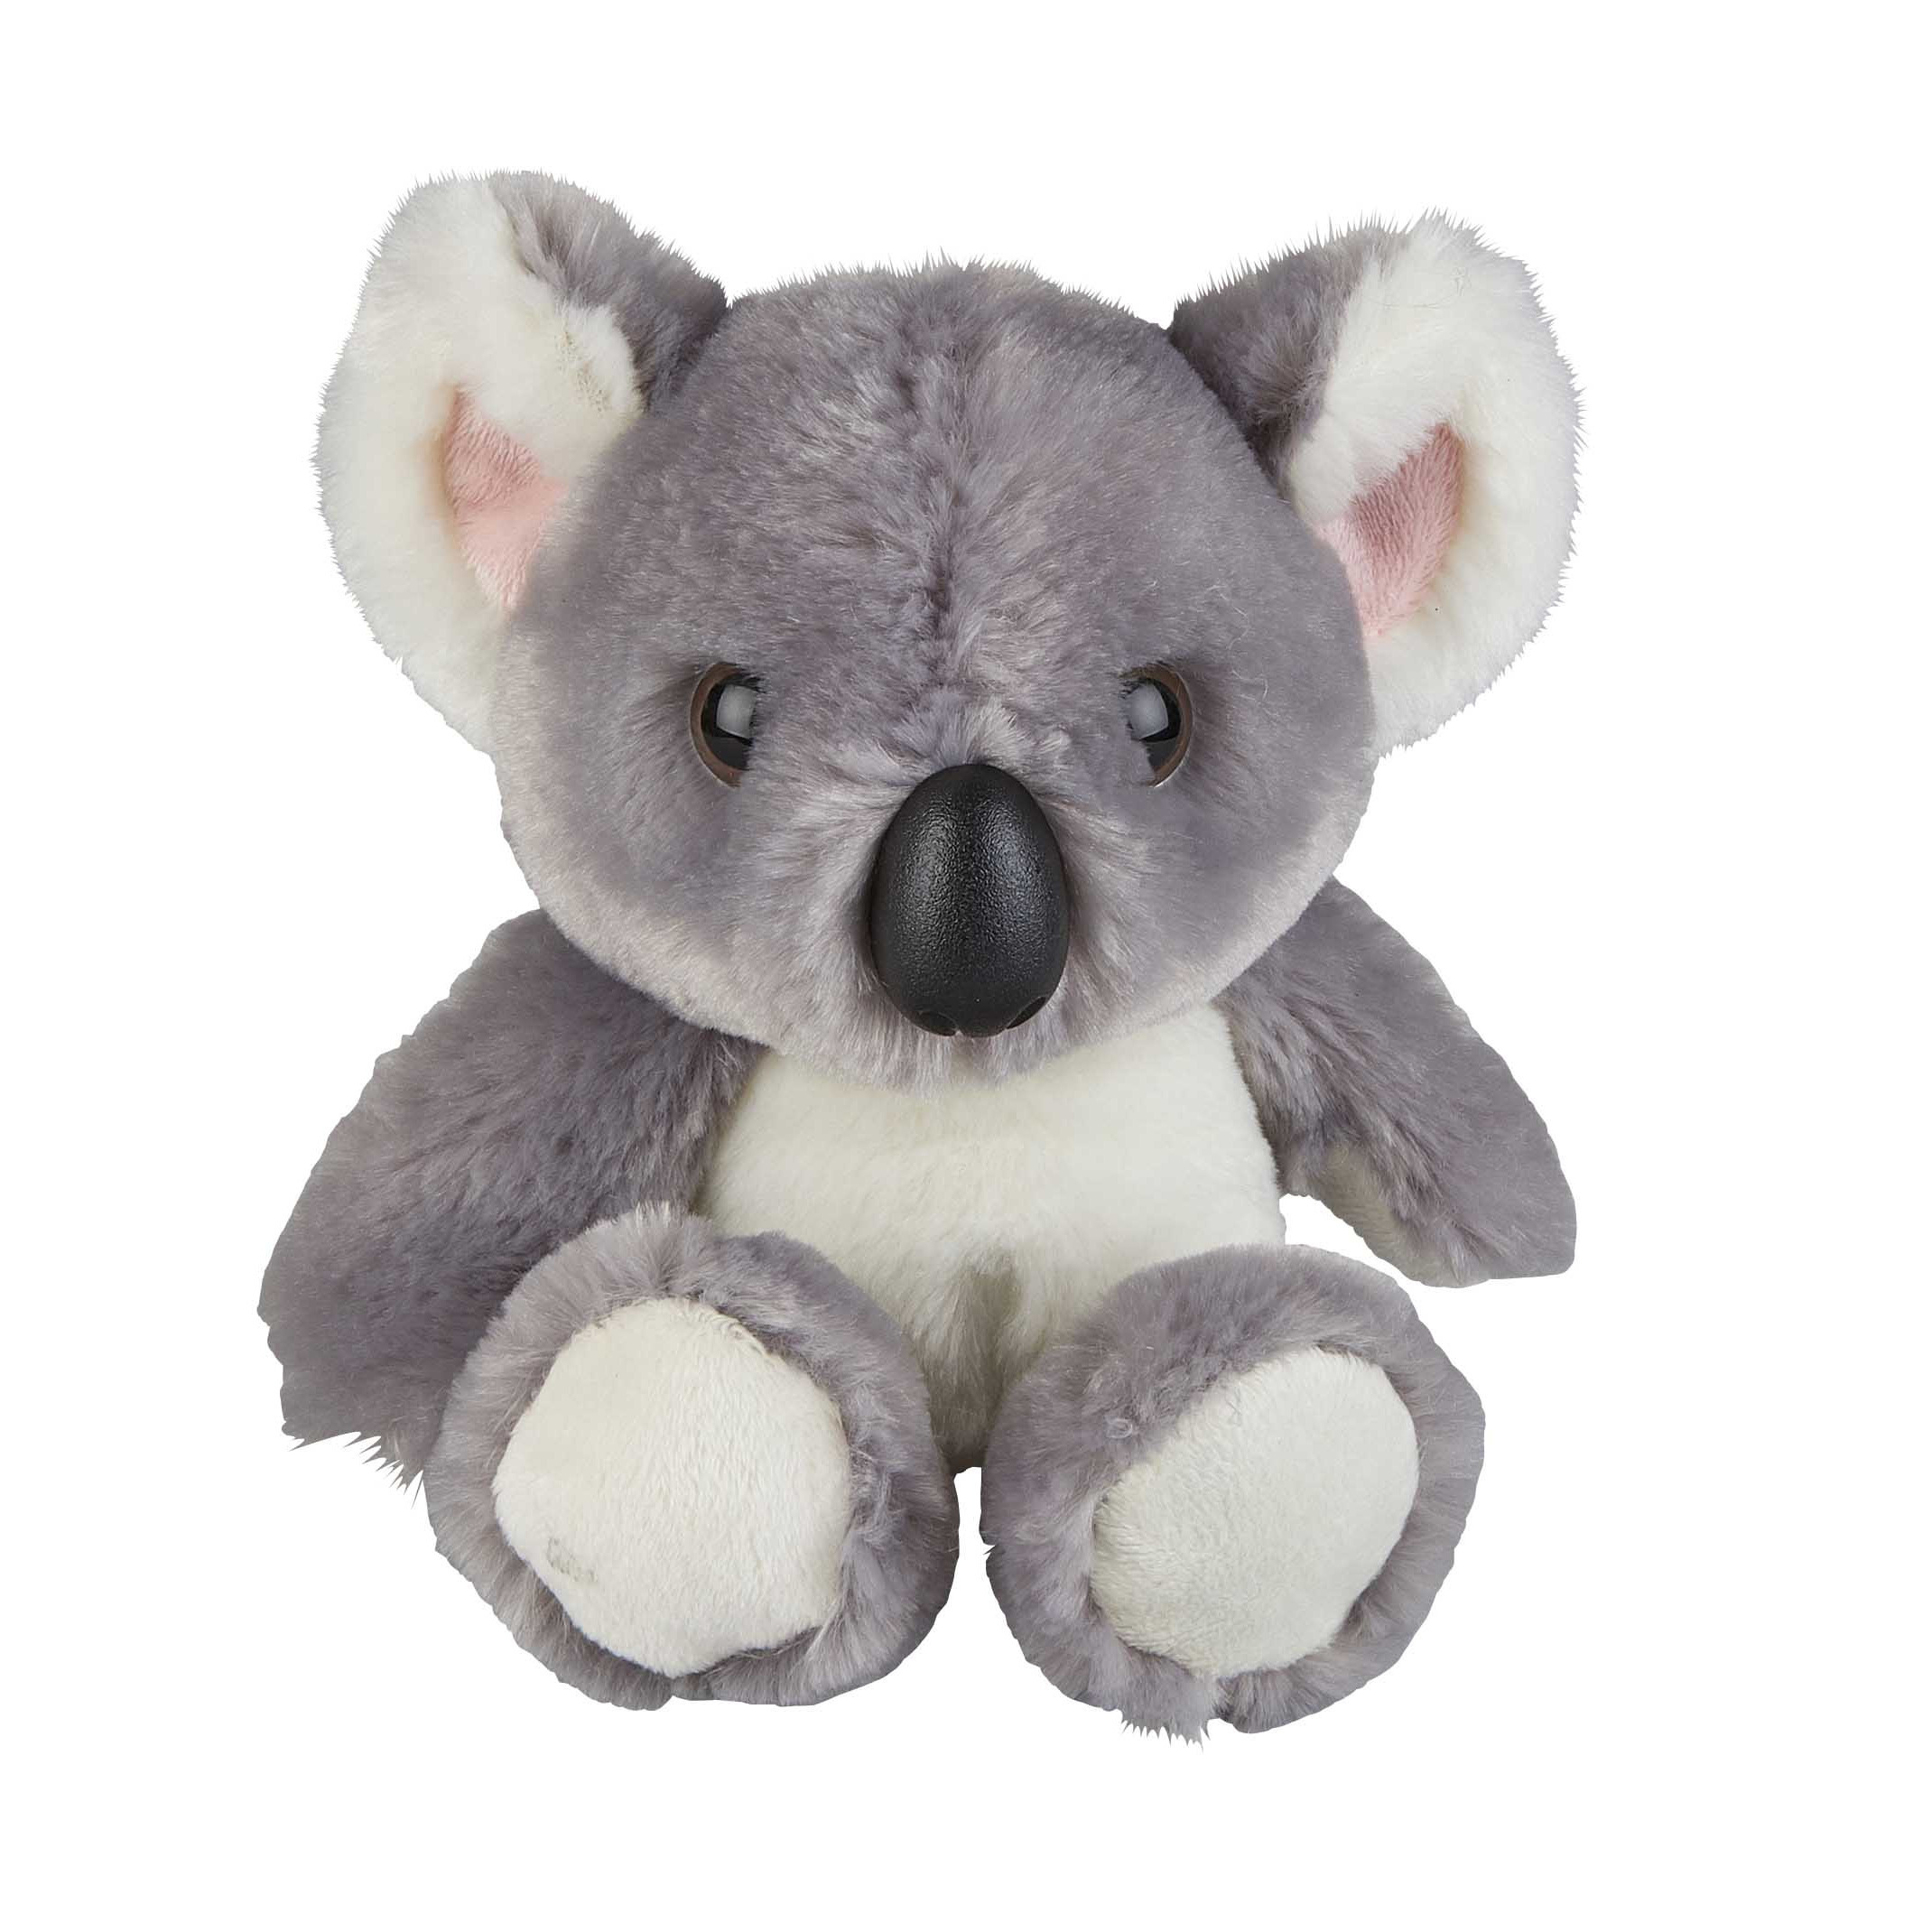 Ravensden Pluche knuffel dieren Koala beertje 18 cm -